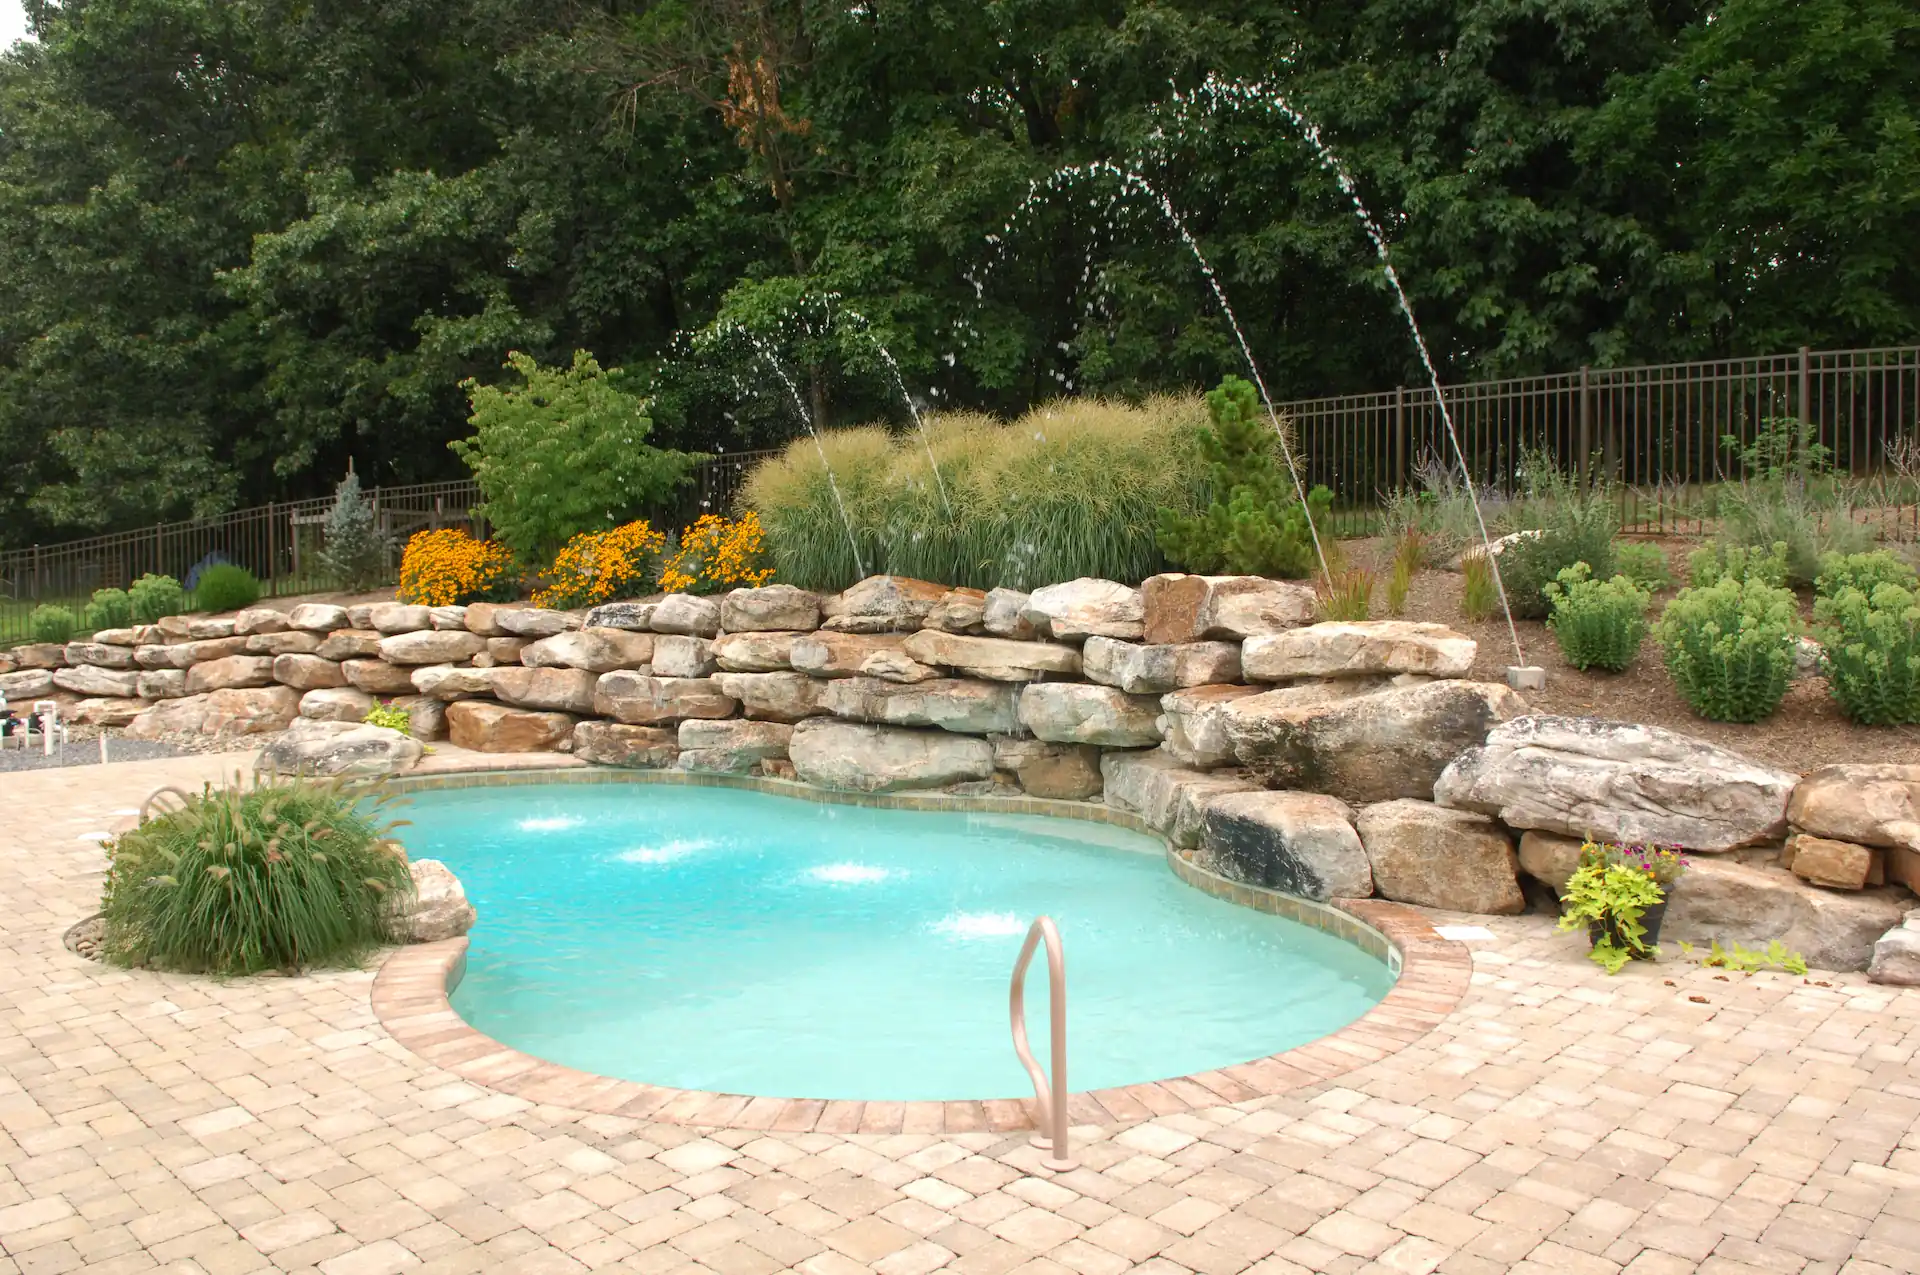 Pool renovation ideas for your backyard.